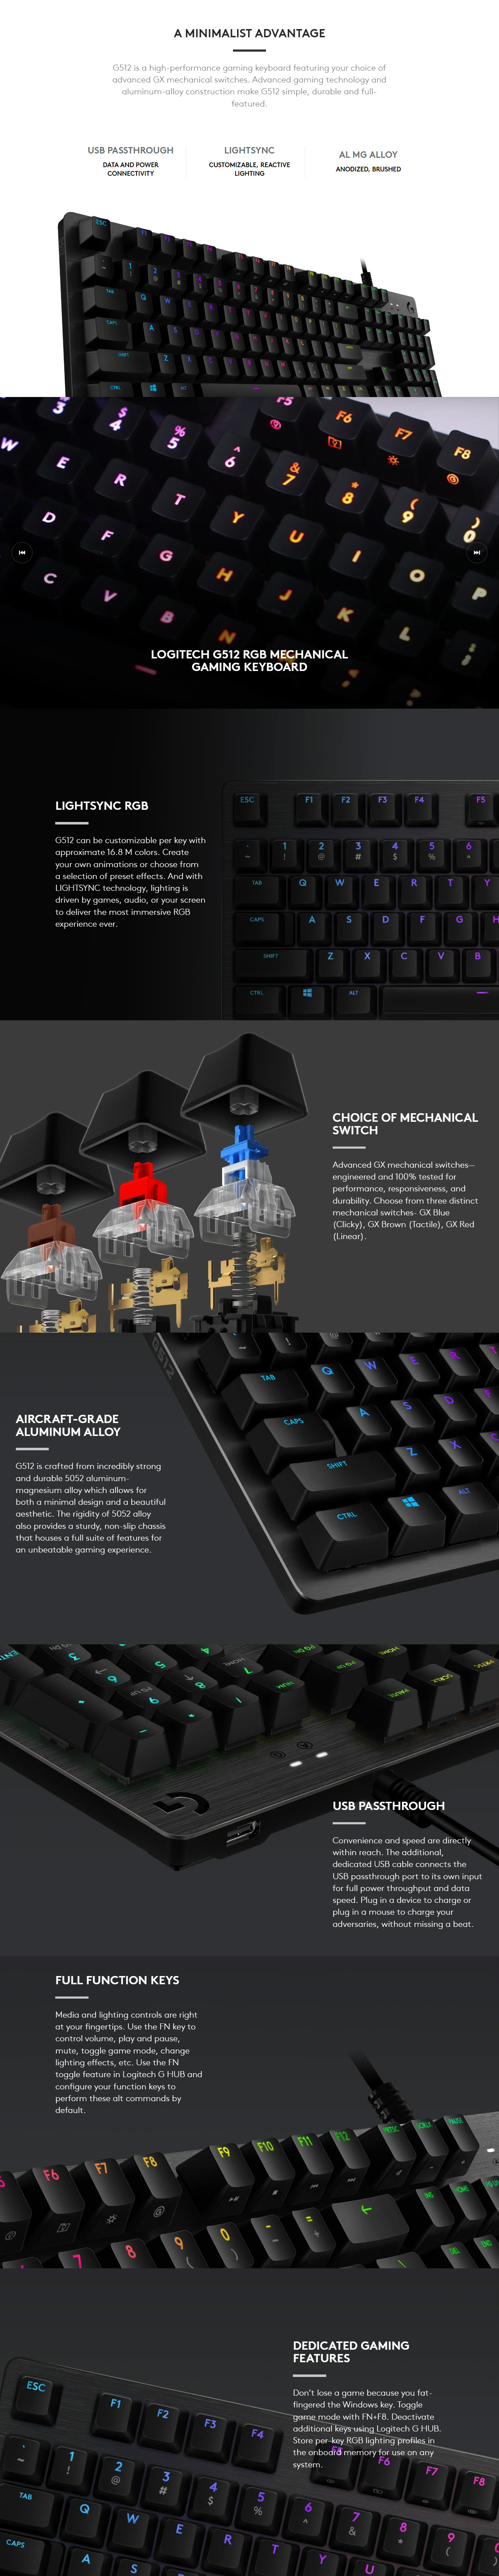 Keyboards-Logitech-G512-Carbon-RGB-Mechanical-Gaming-Keyboard-GX-Blue-Switch-1